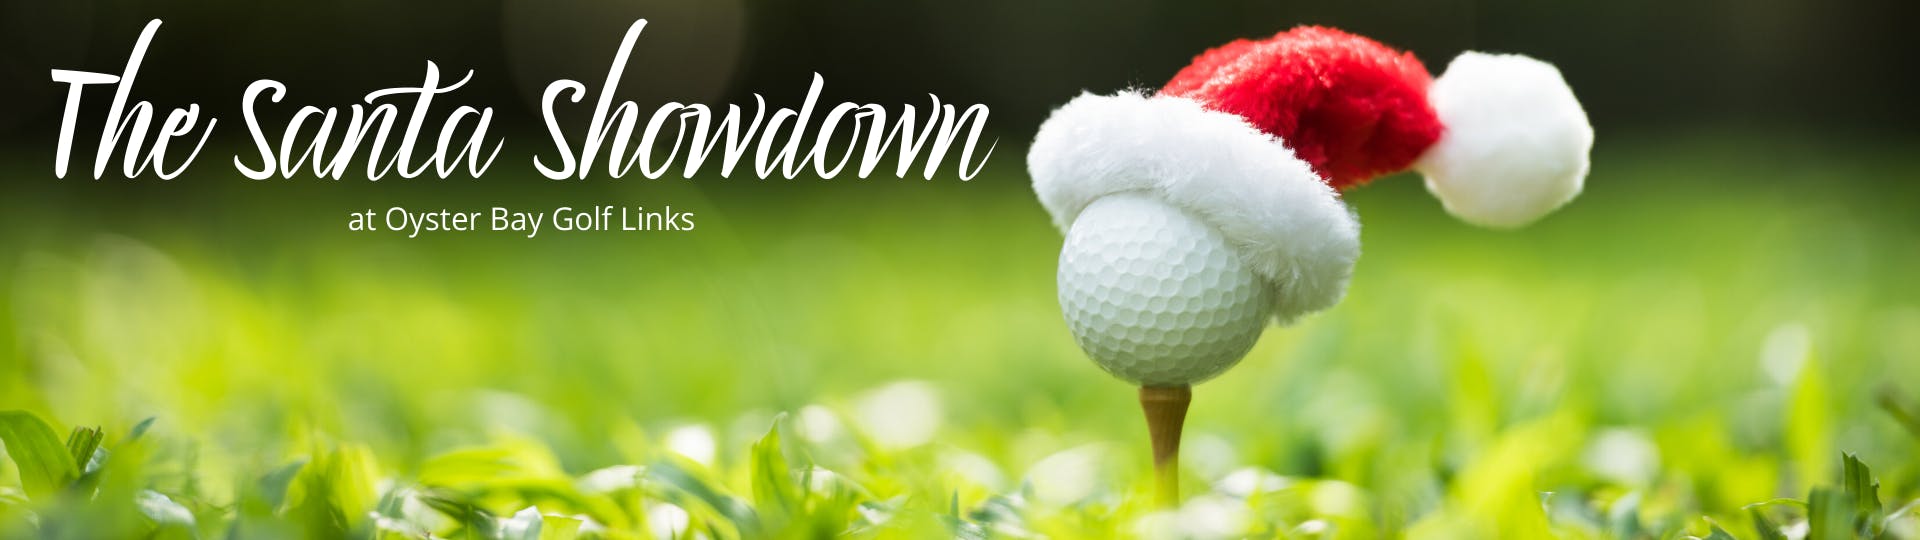 Image of Santa hat on a golf ball. The Santa Showdown at Oyster Bay Golf Links